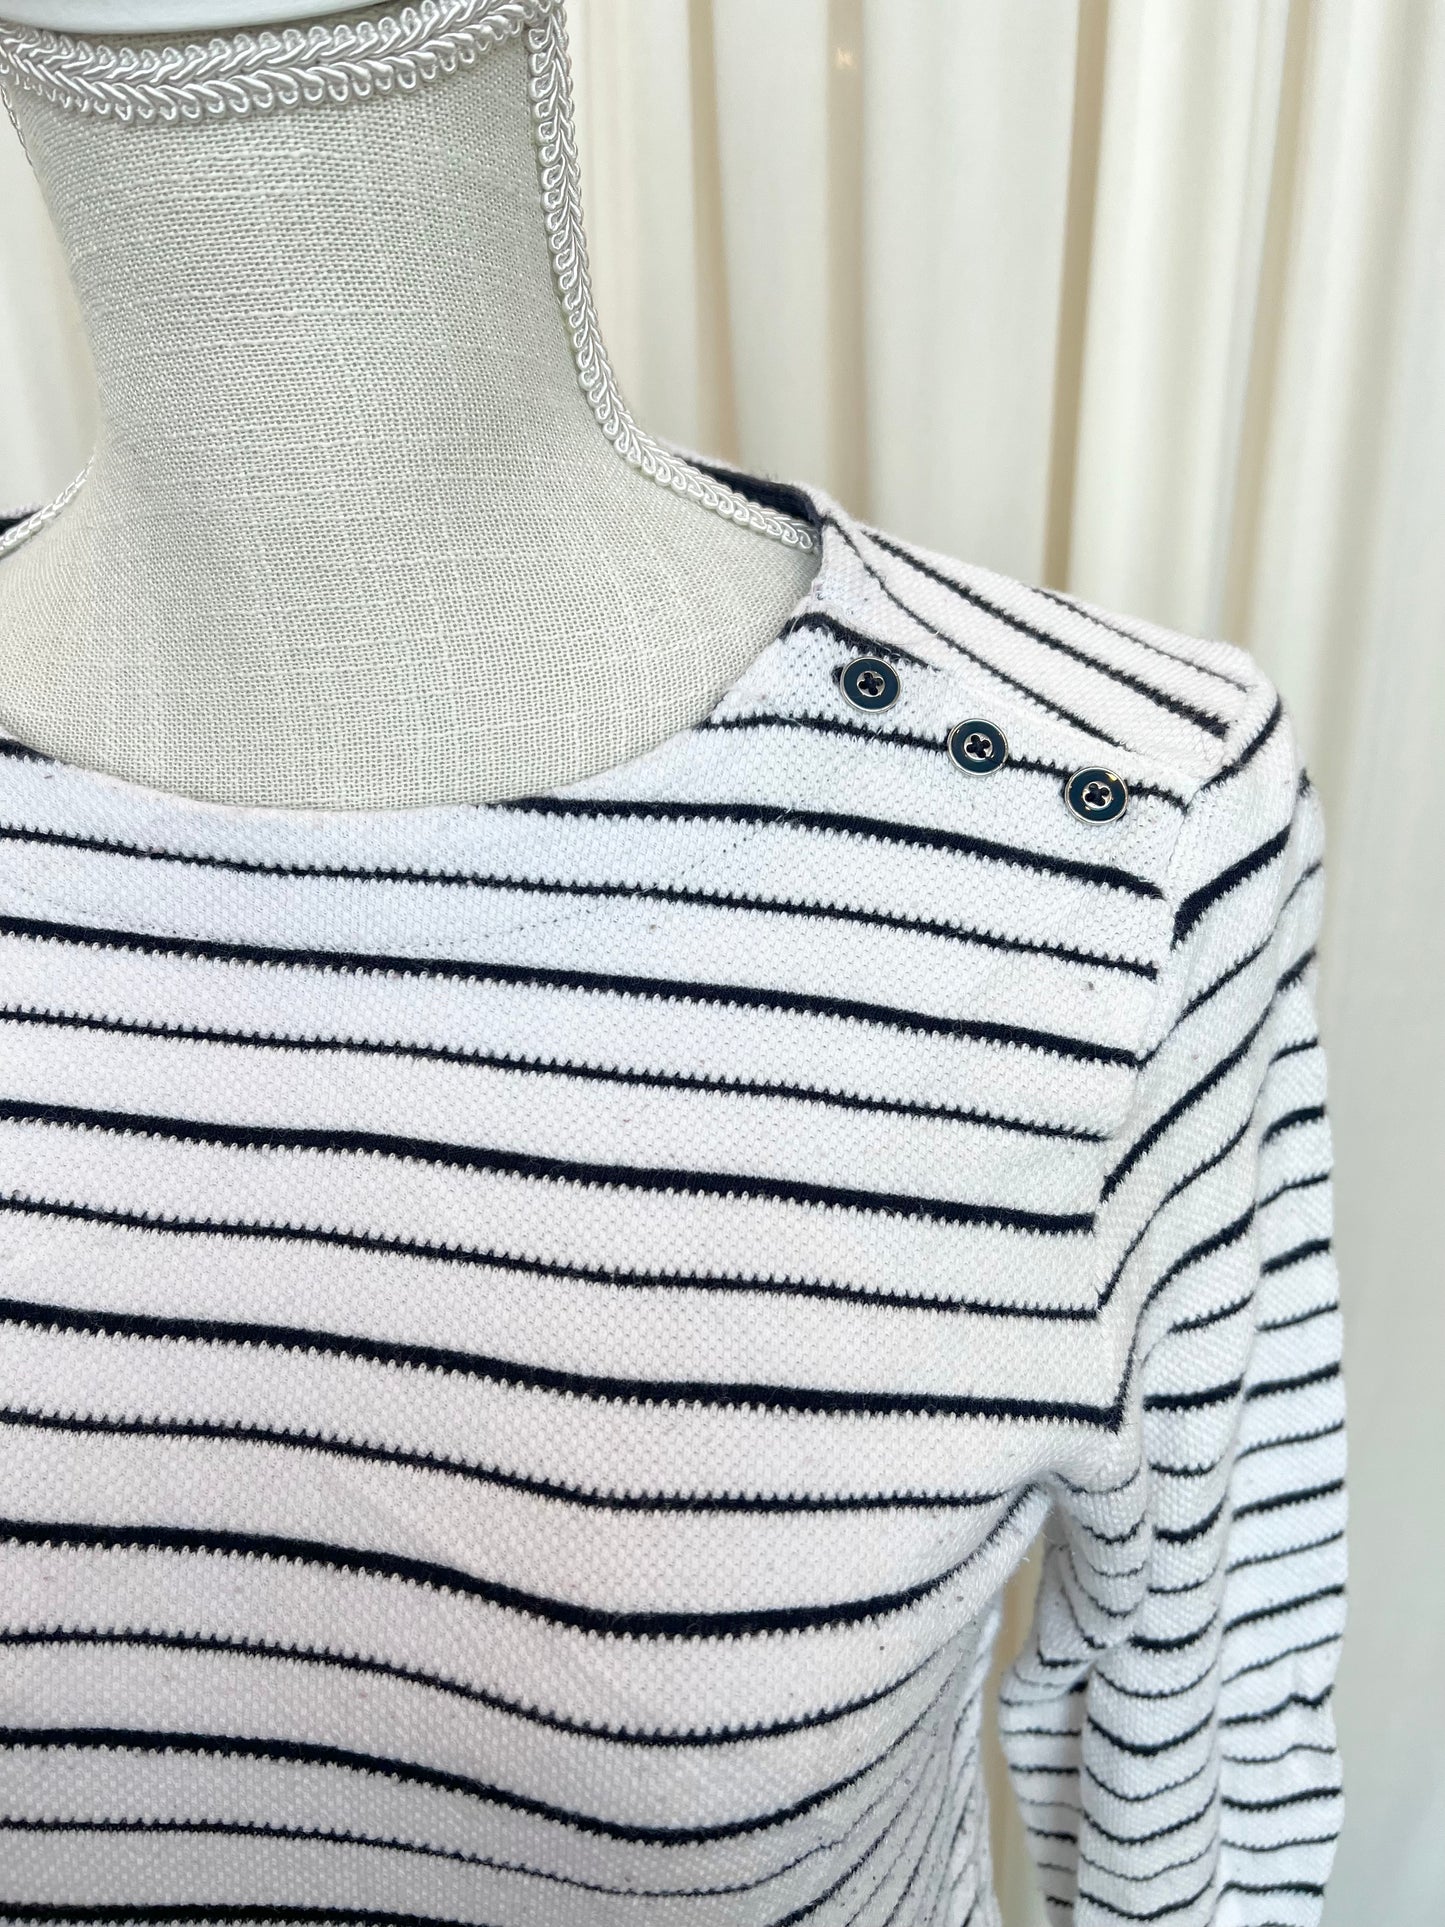 White Striped Sweater - Medium